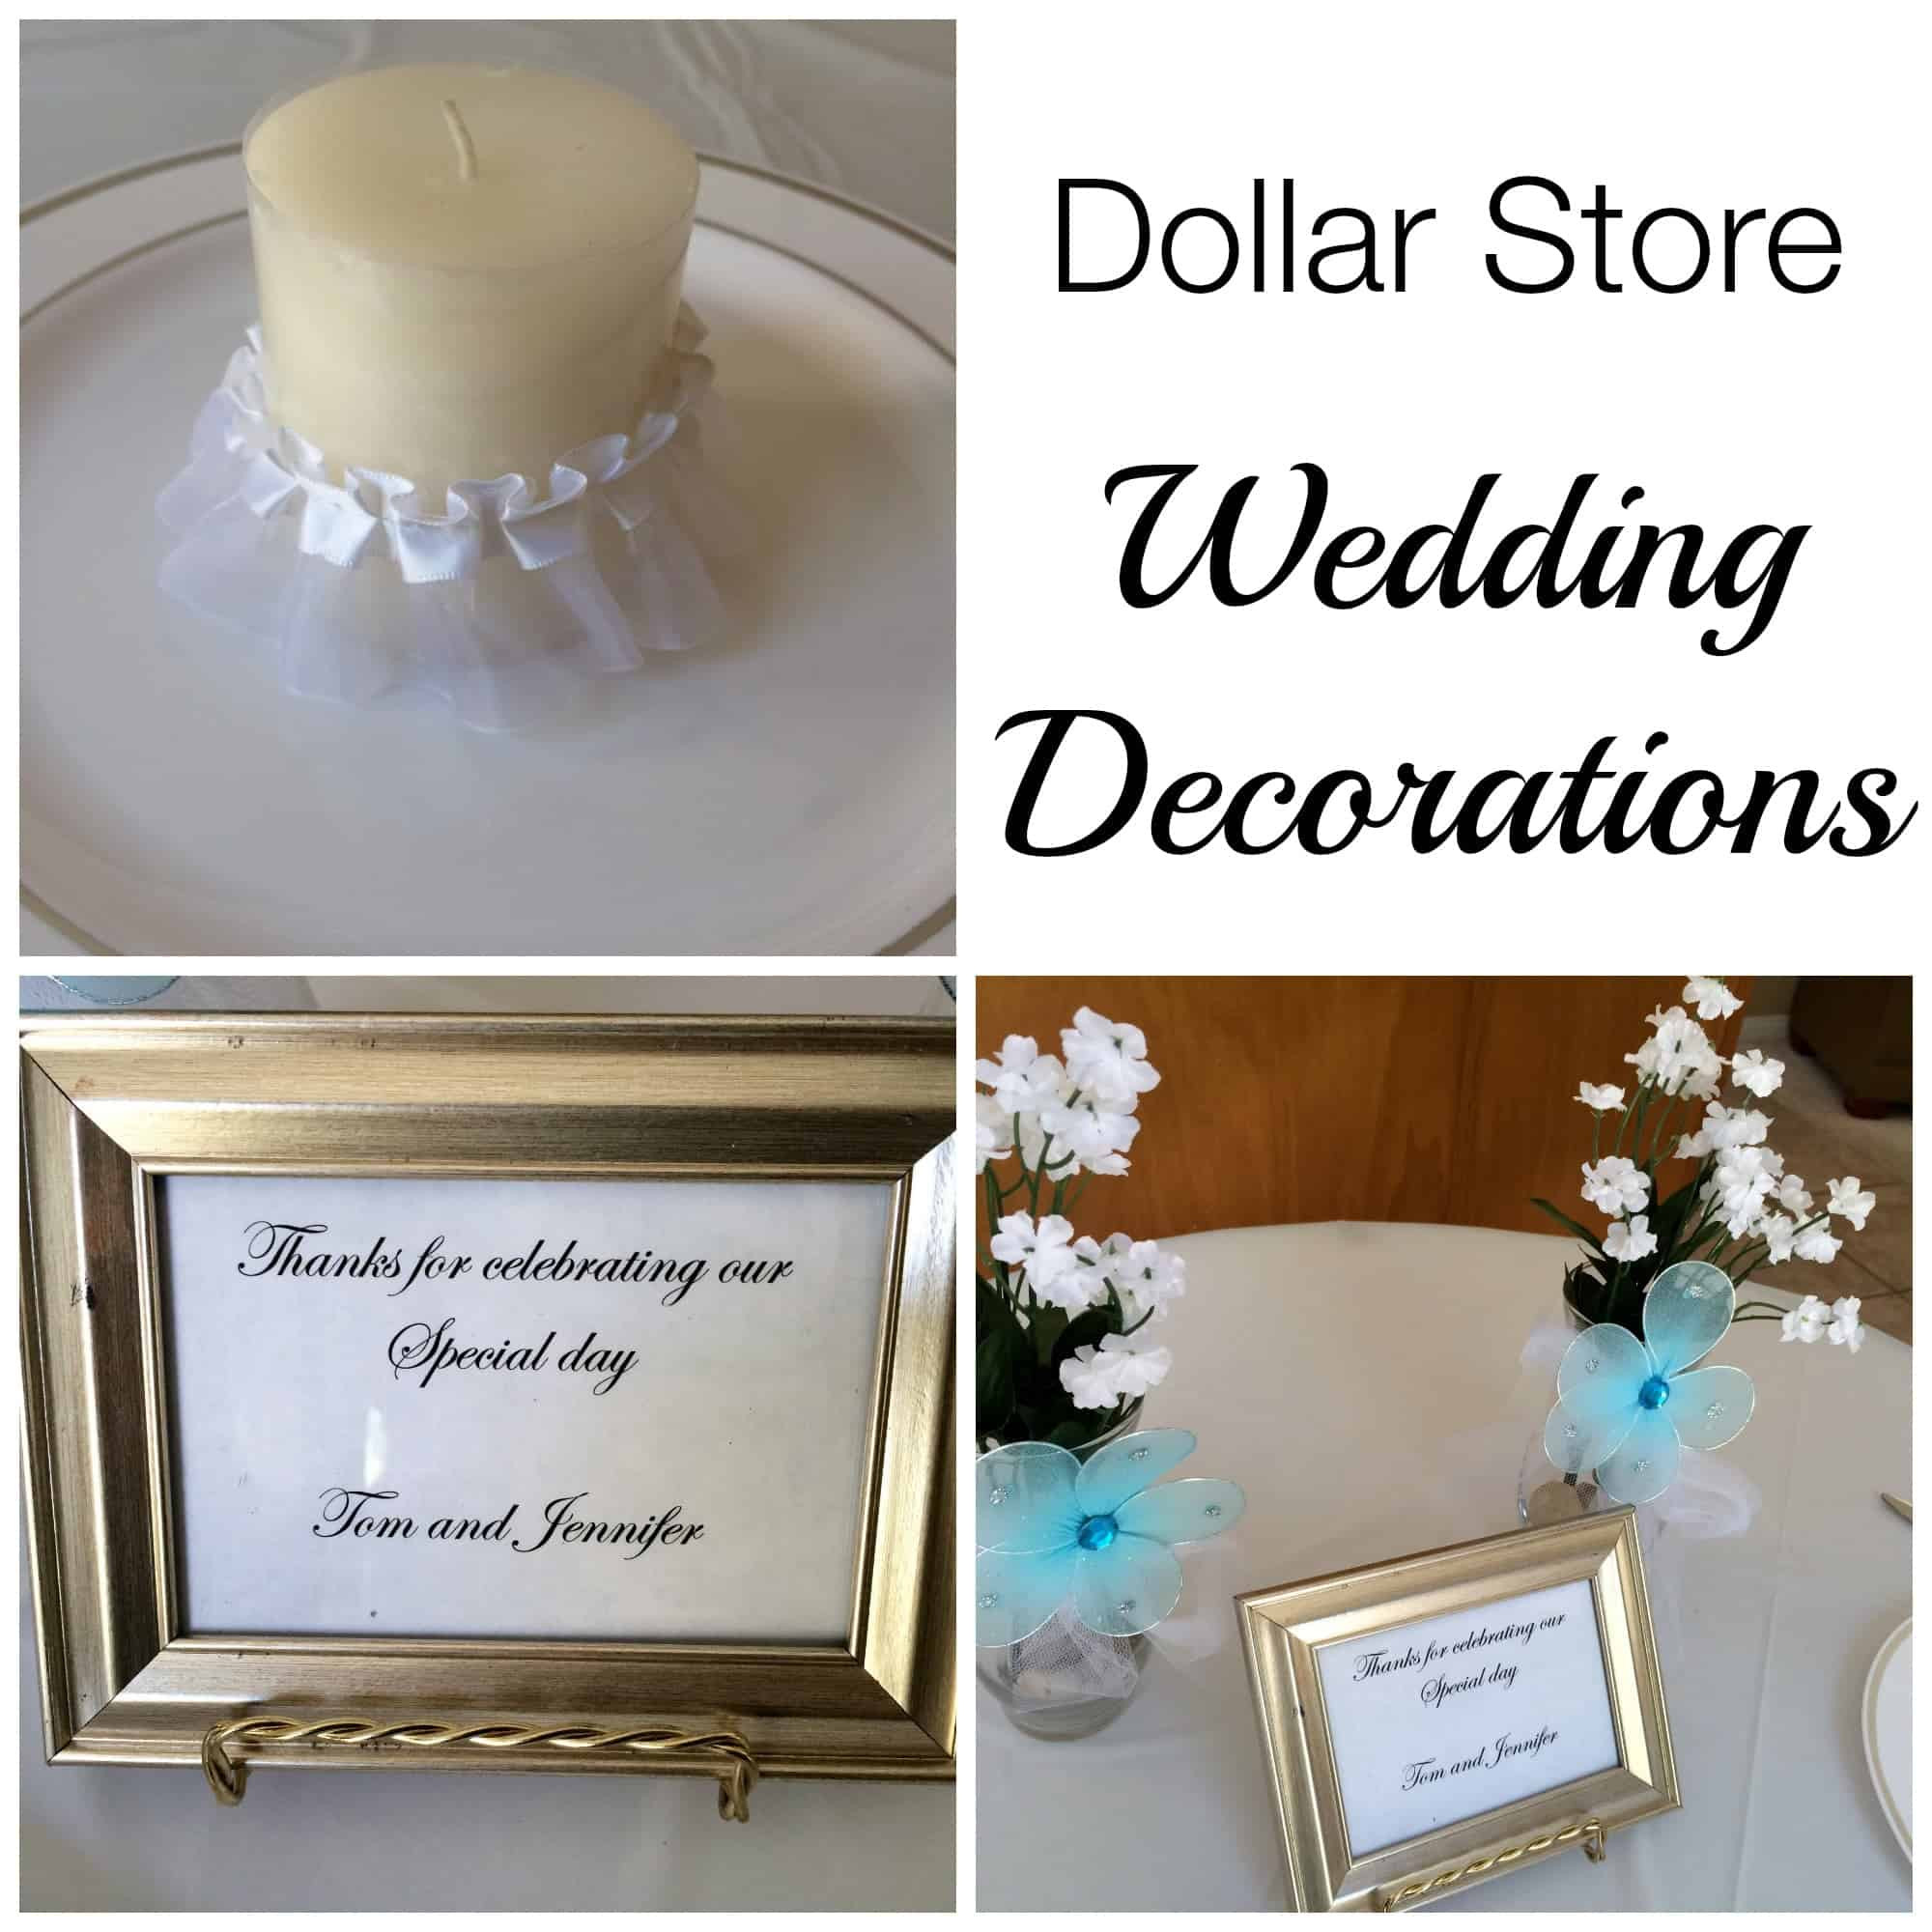 Dollar Tree Wedding Decorations
 Dollar Store Wedding Decorations